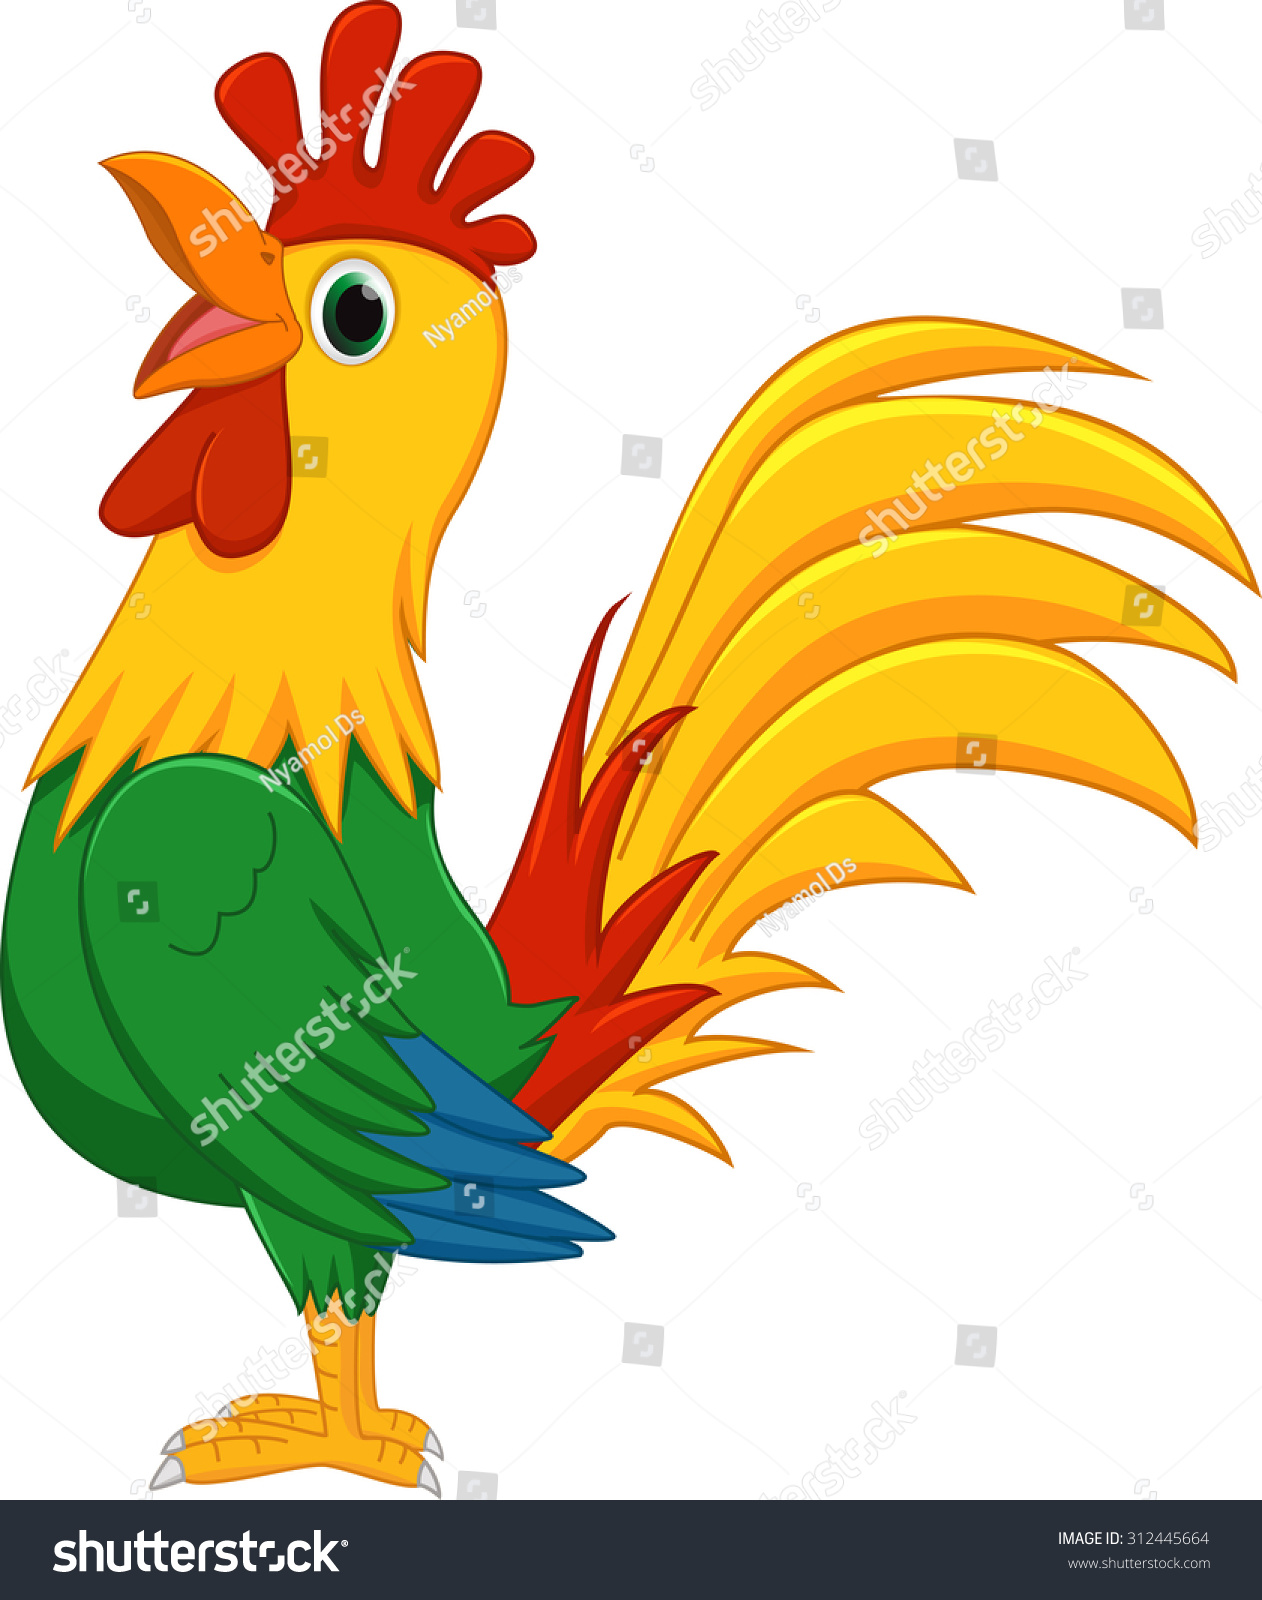 Cute Rooster Cartoon Stock Vector 312445664 - Shutterstock